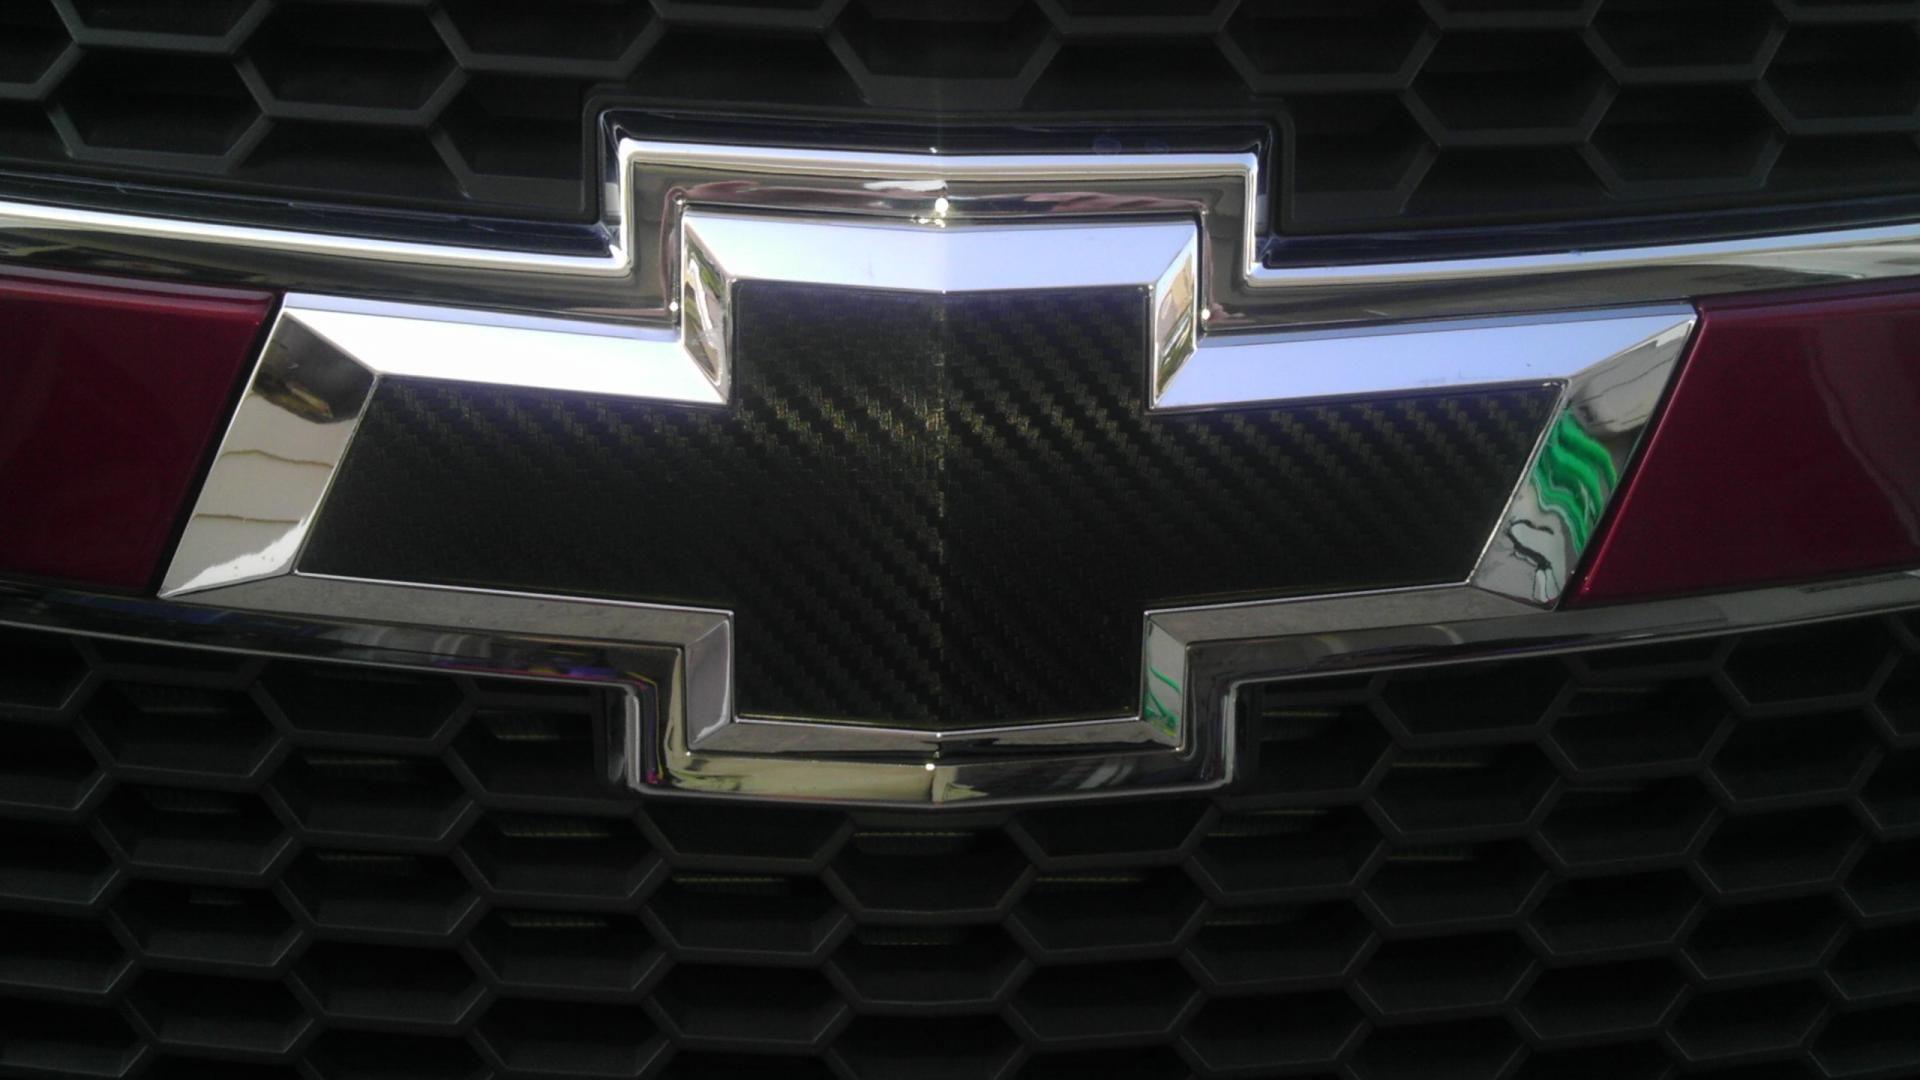 Camo Chevy Emblem. Chevy Trucks Camo Sport Pack With Camo Chevy